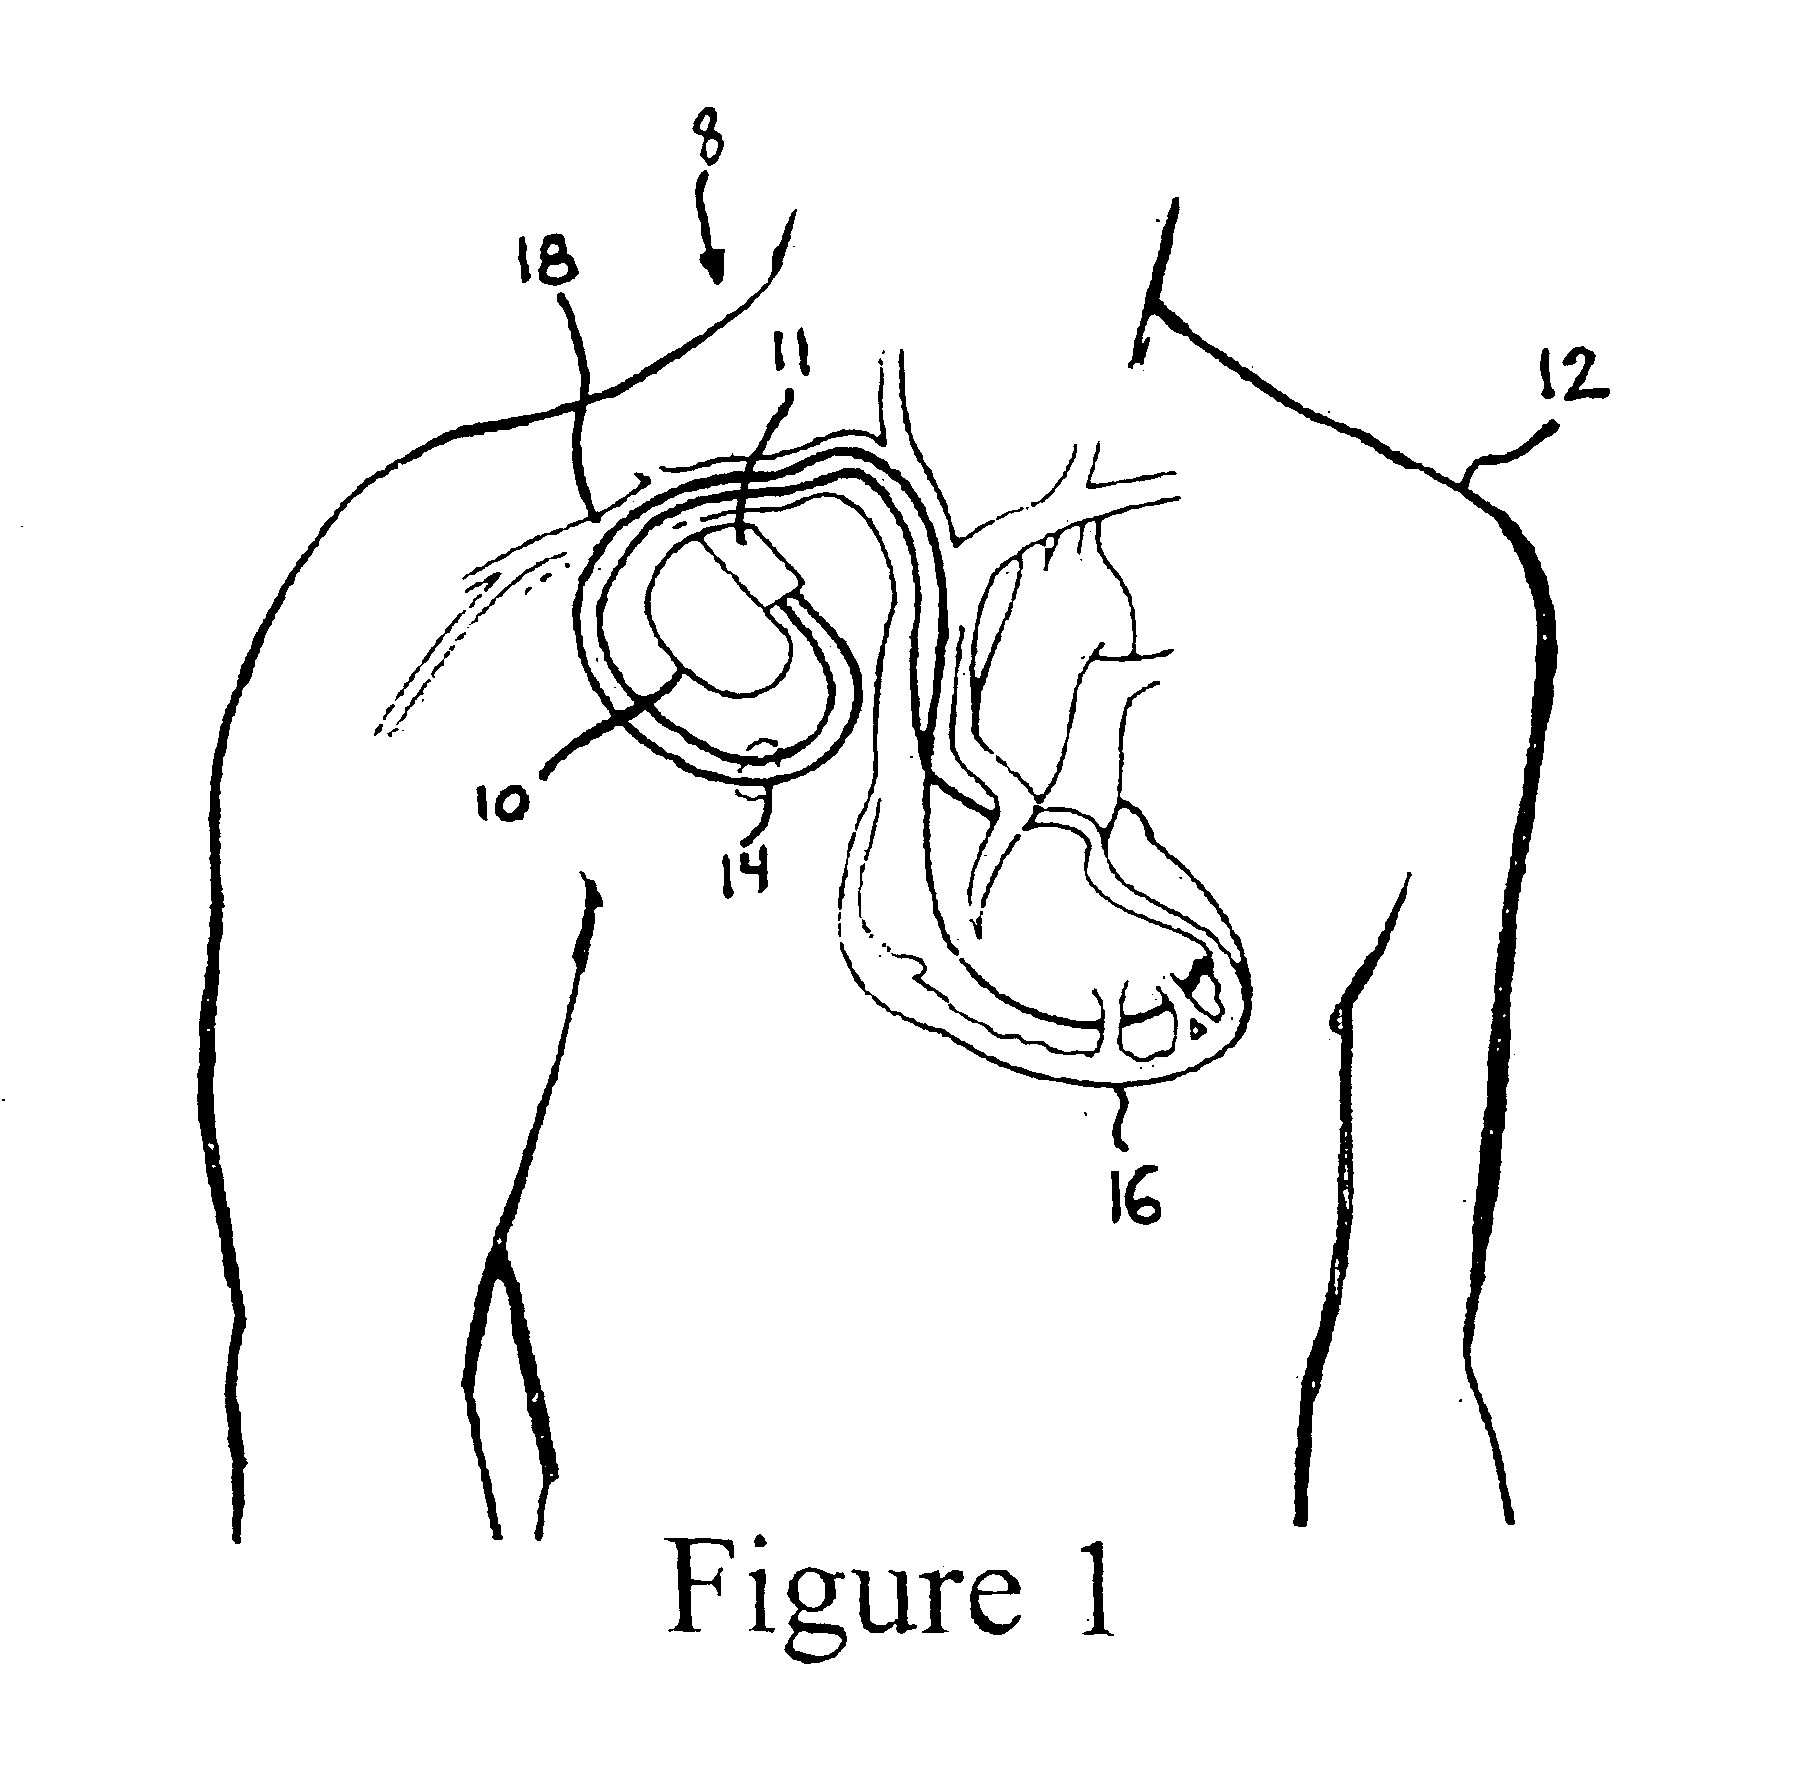 Method and apparatus for placing a coronary sinus/cardiac vein pacing lead using a multi-purpose side lumen